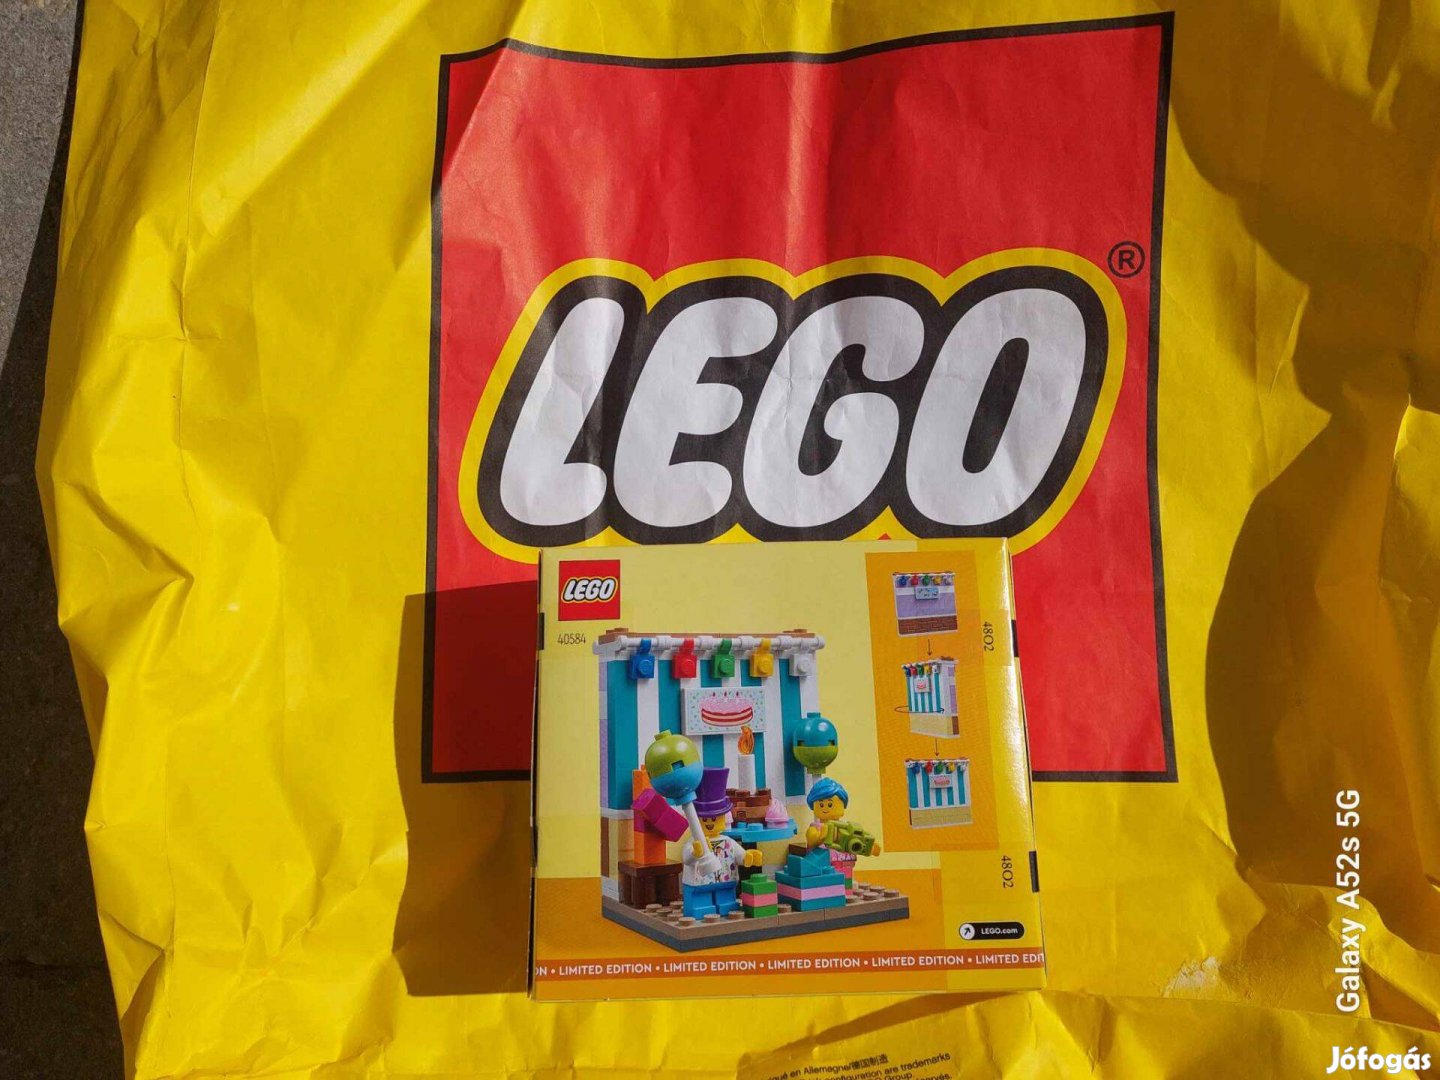 LEGO 40584 Limited Edition Szülinapi dioráma